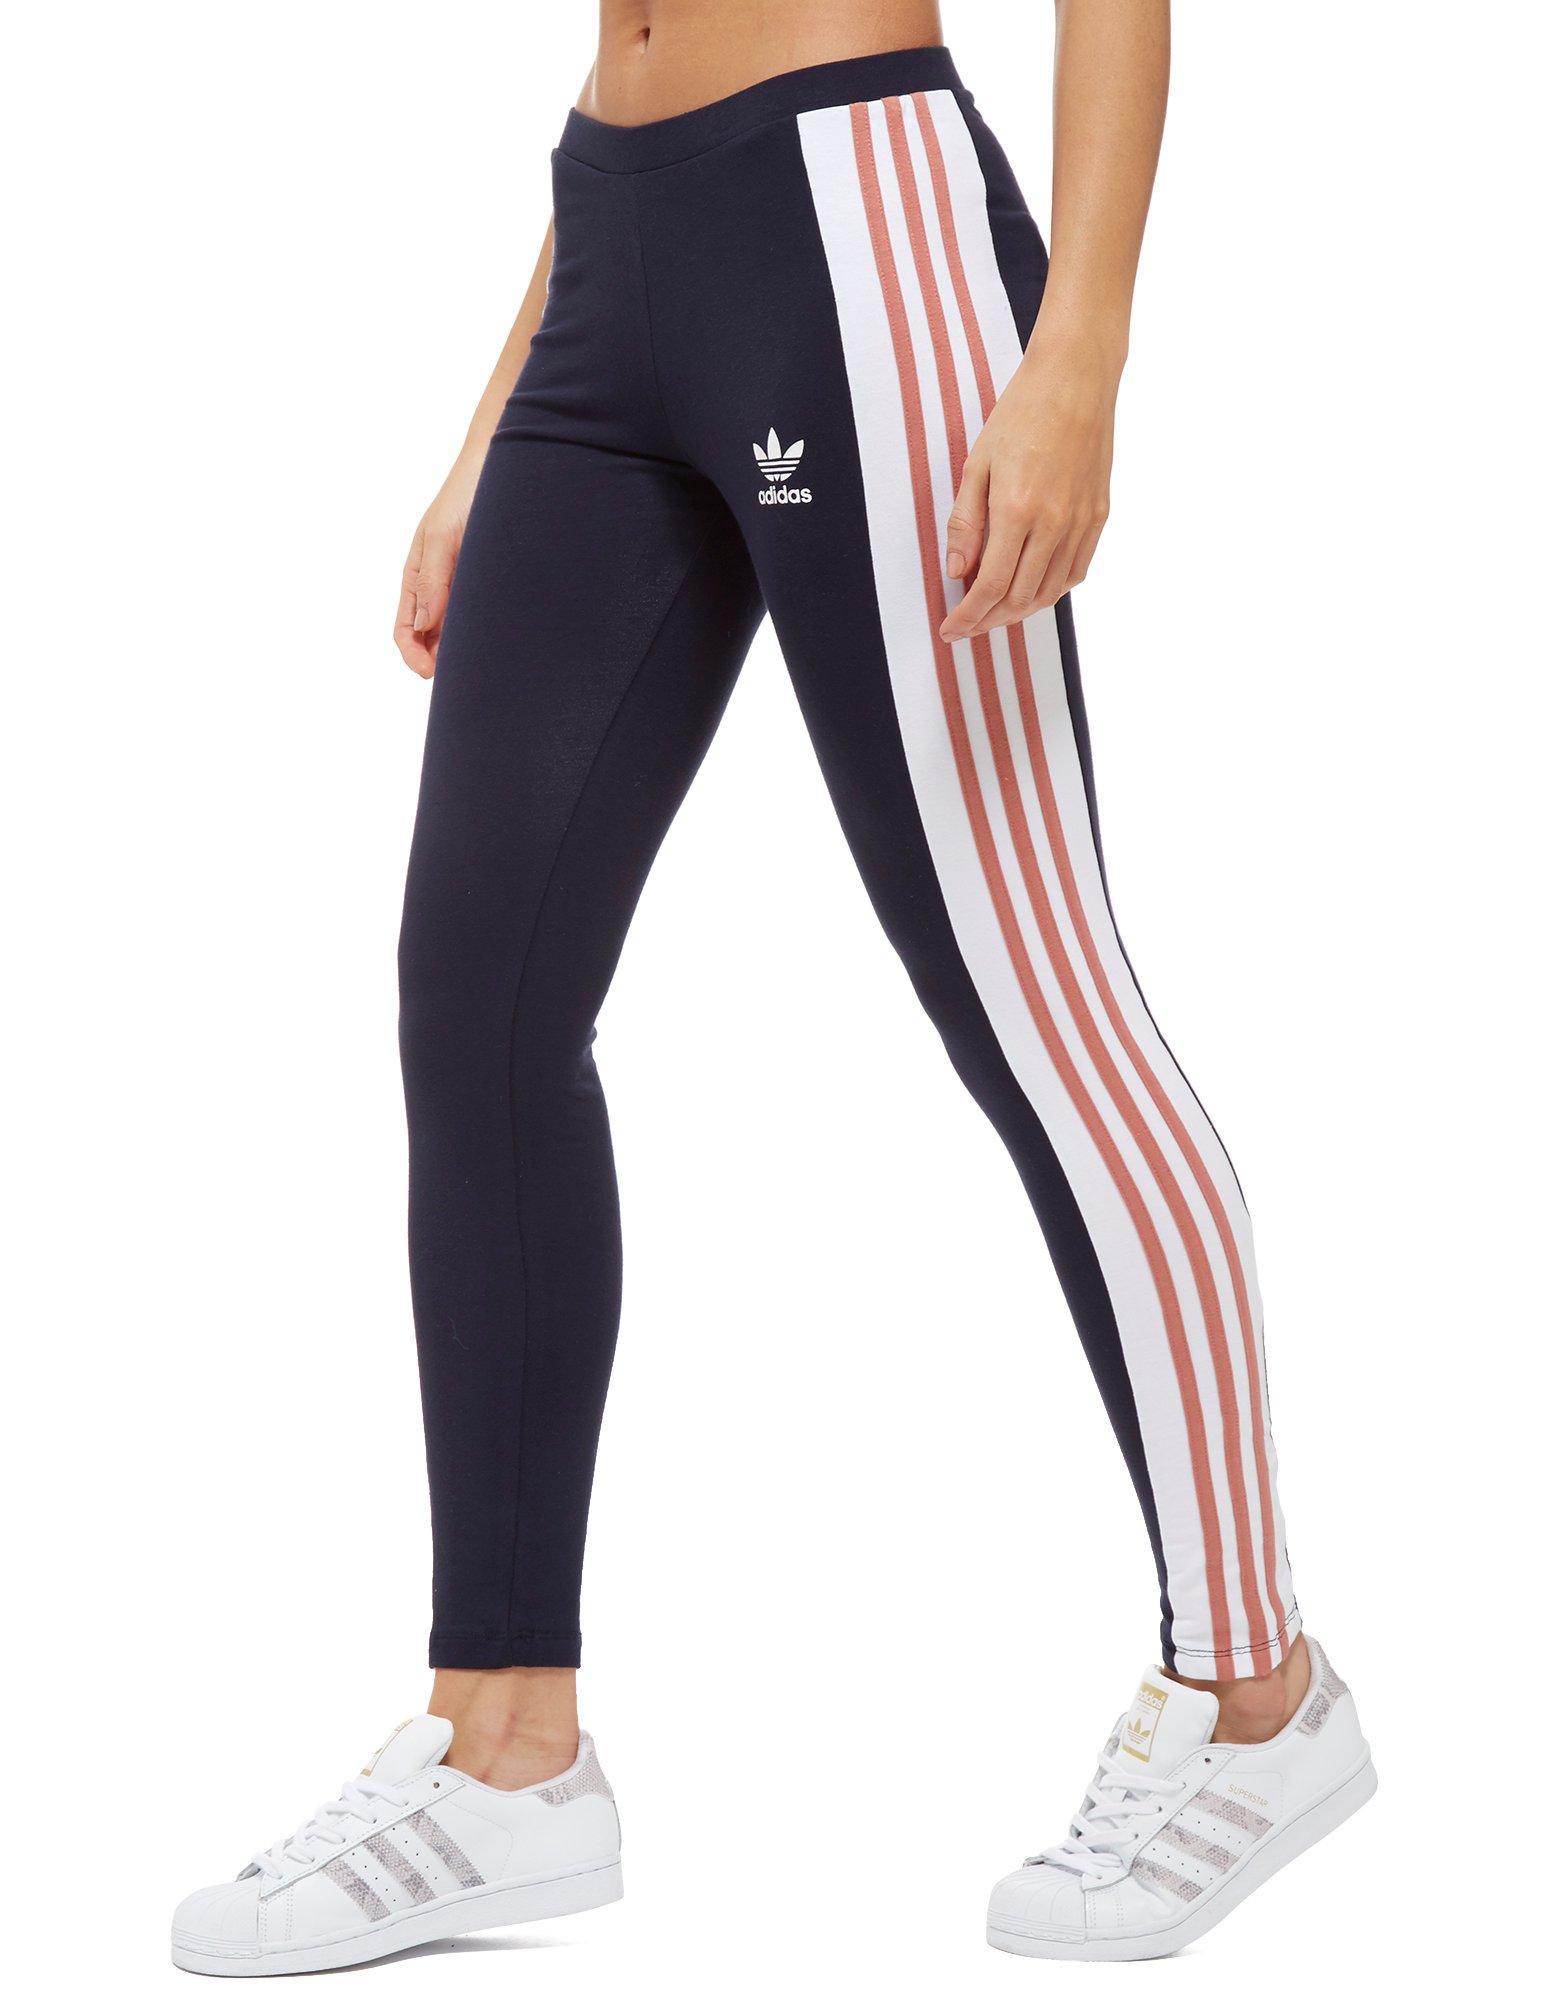 adidas Originals Cotton 3-stripes Panel Leggings in Navy/Pink (Blue) - Lyst